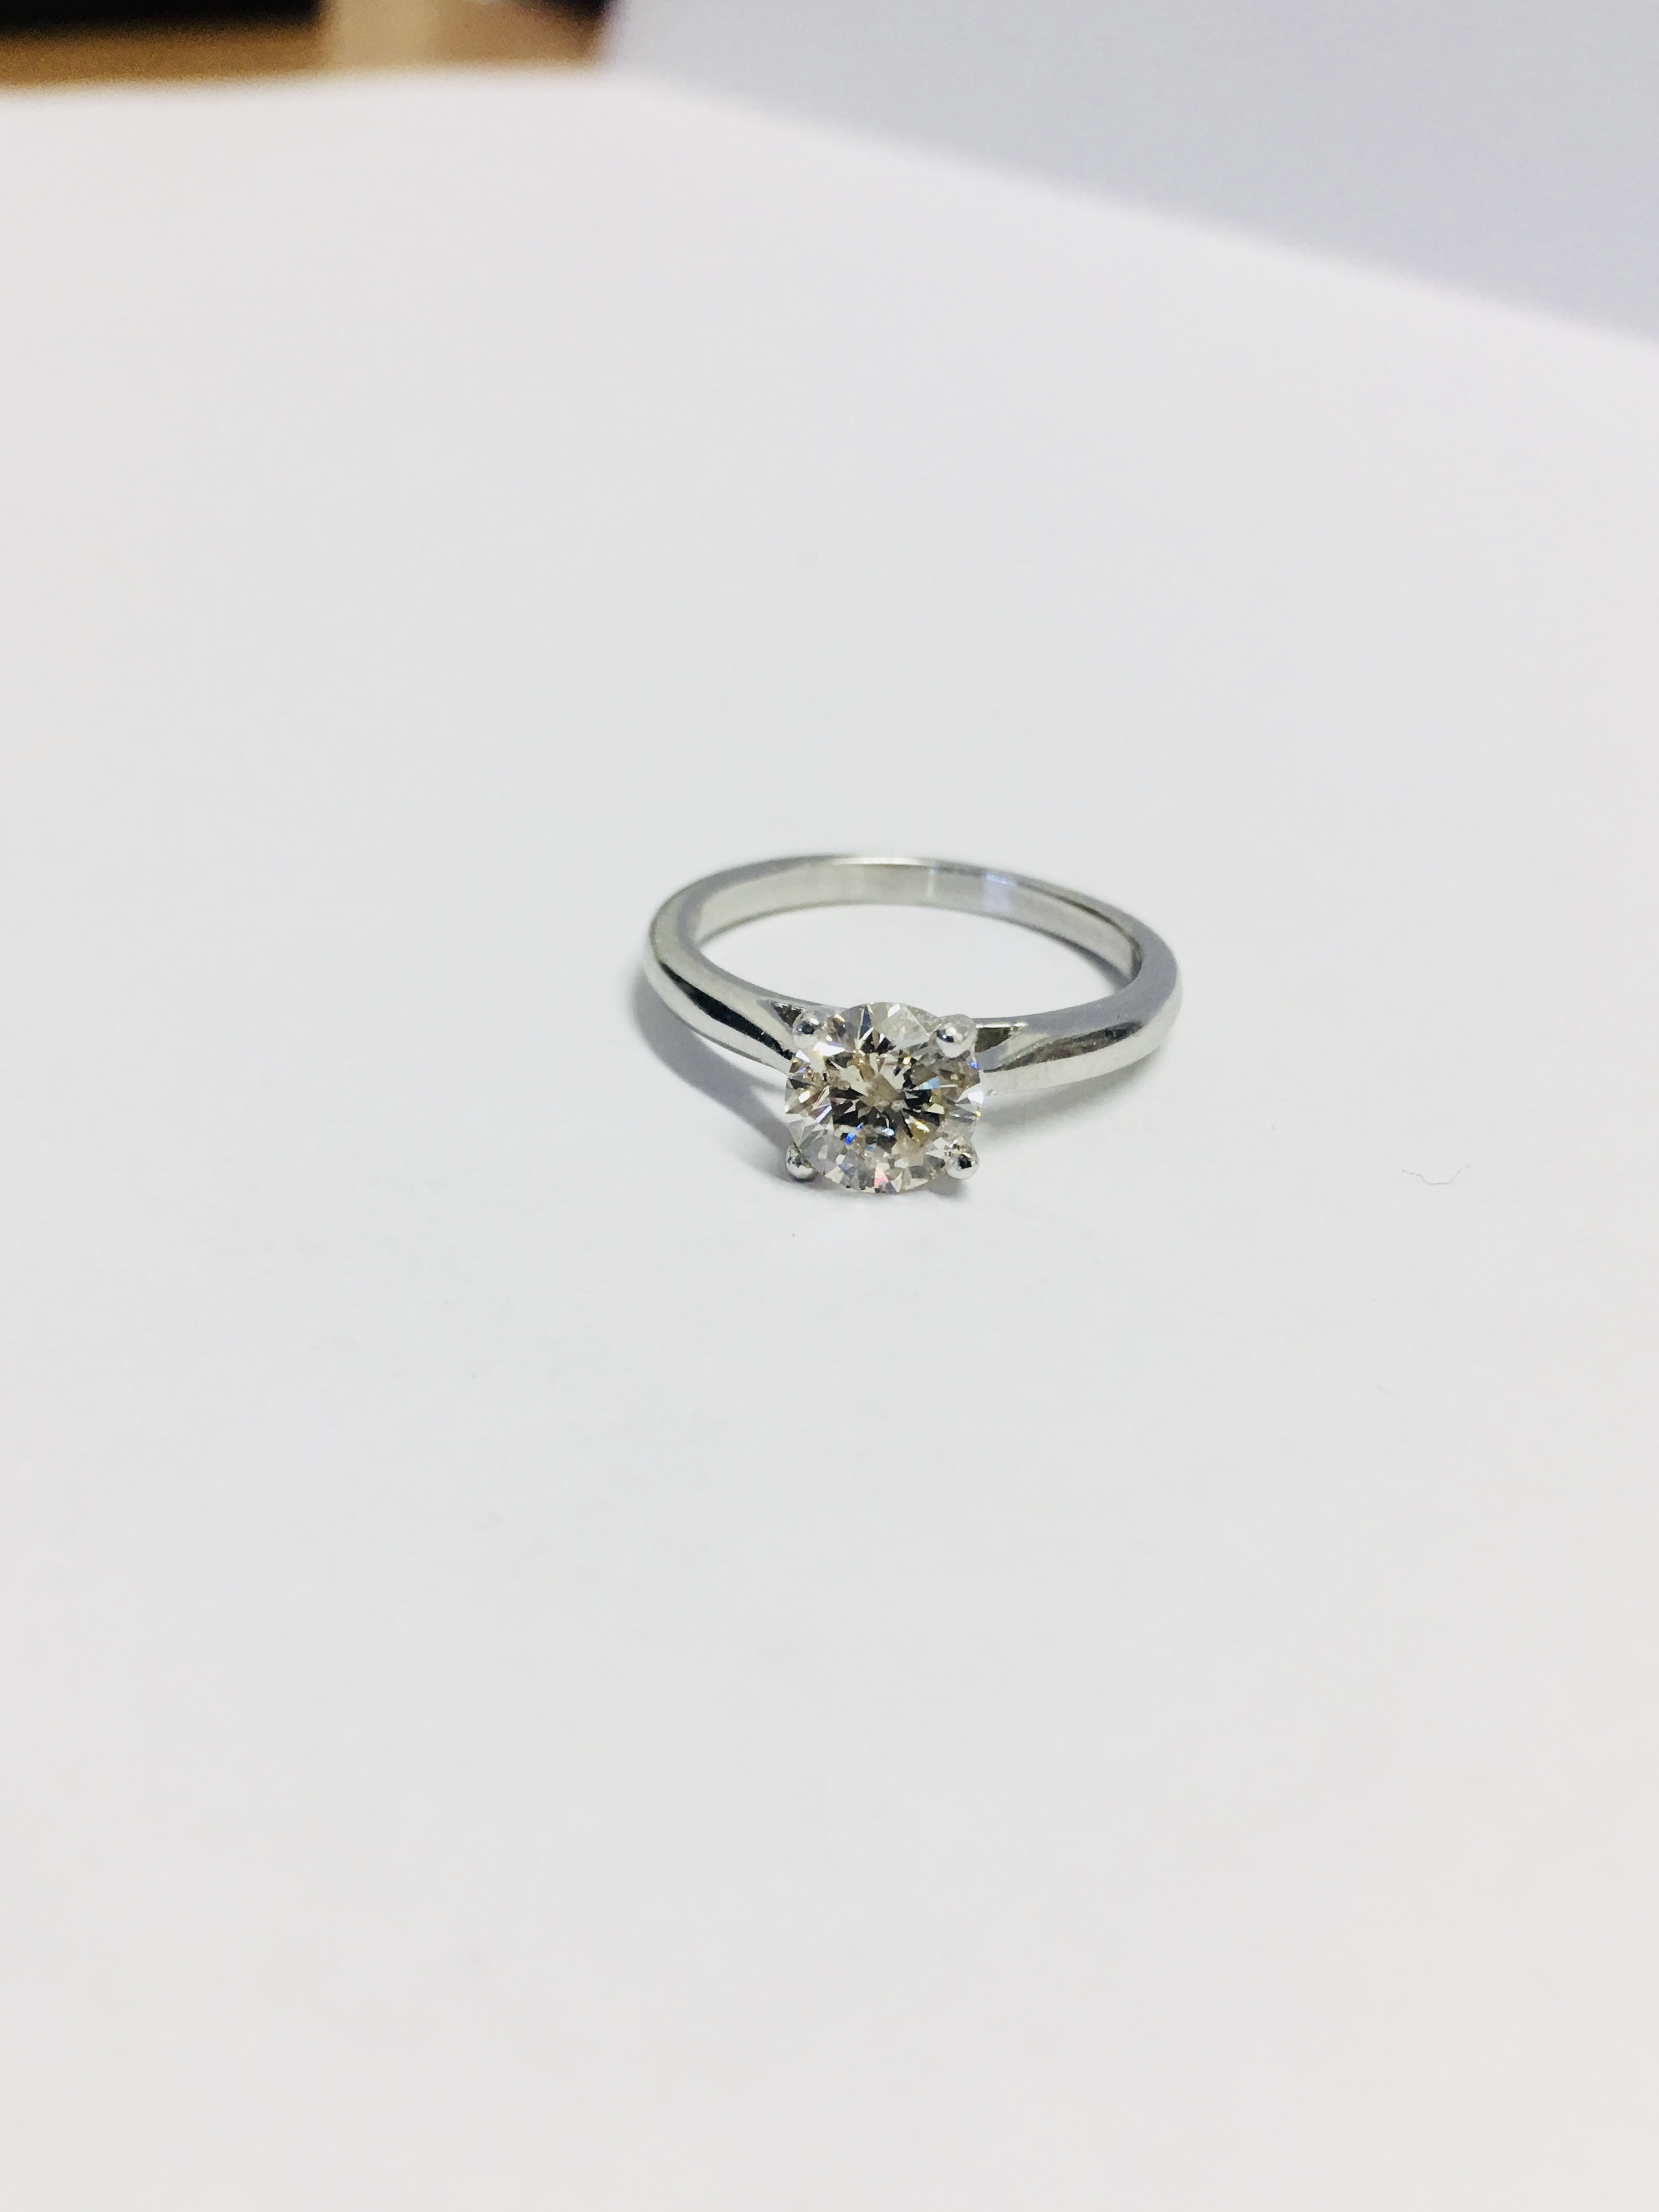 1Ct Brilliant Cut Diamond Solitaire Ring, - Image 5 of 5